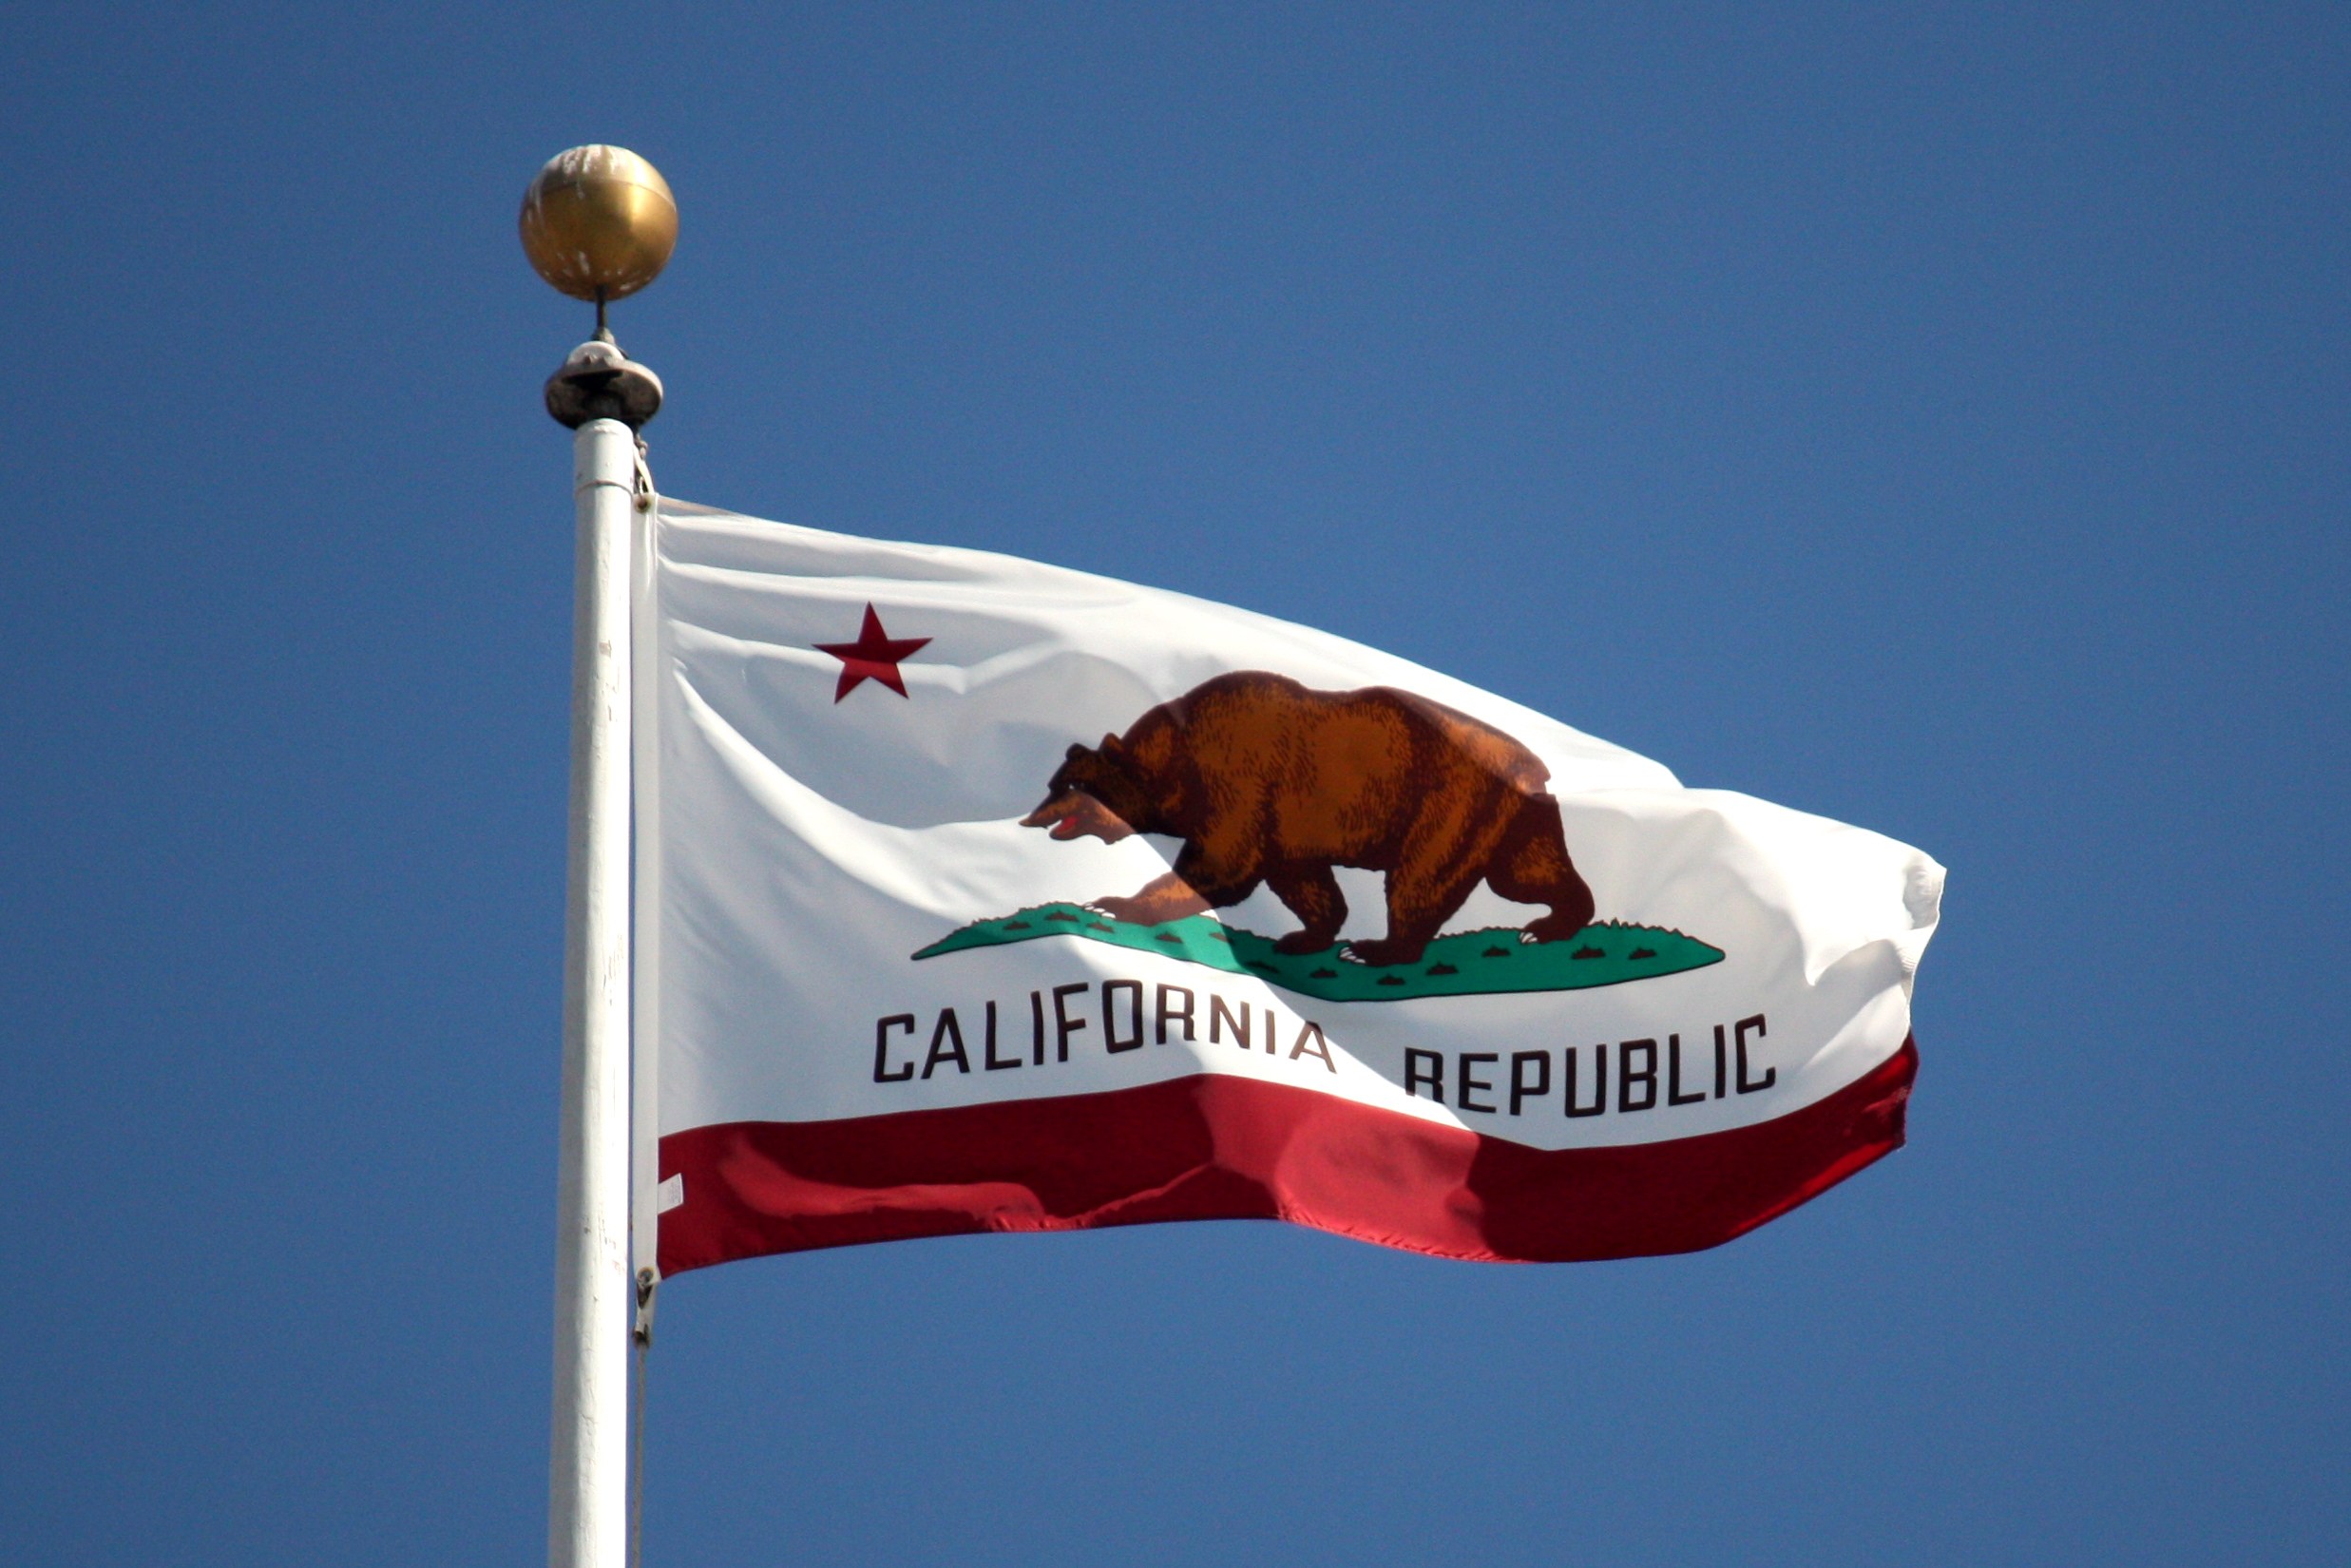 Medible review happy new year legal adult marijuana sales start in california